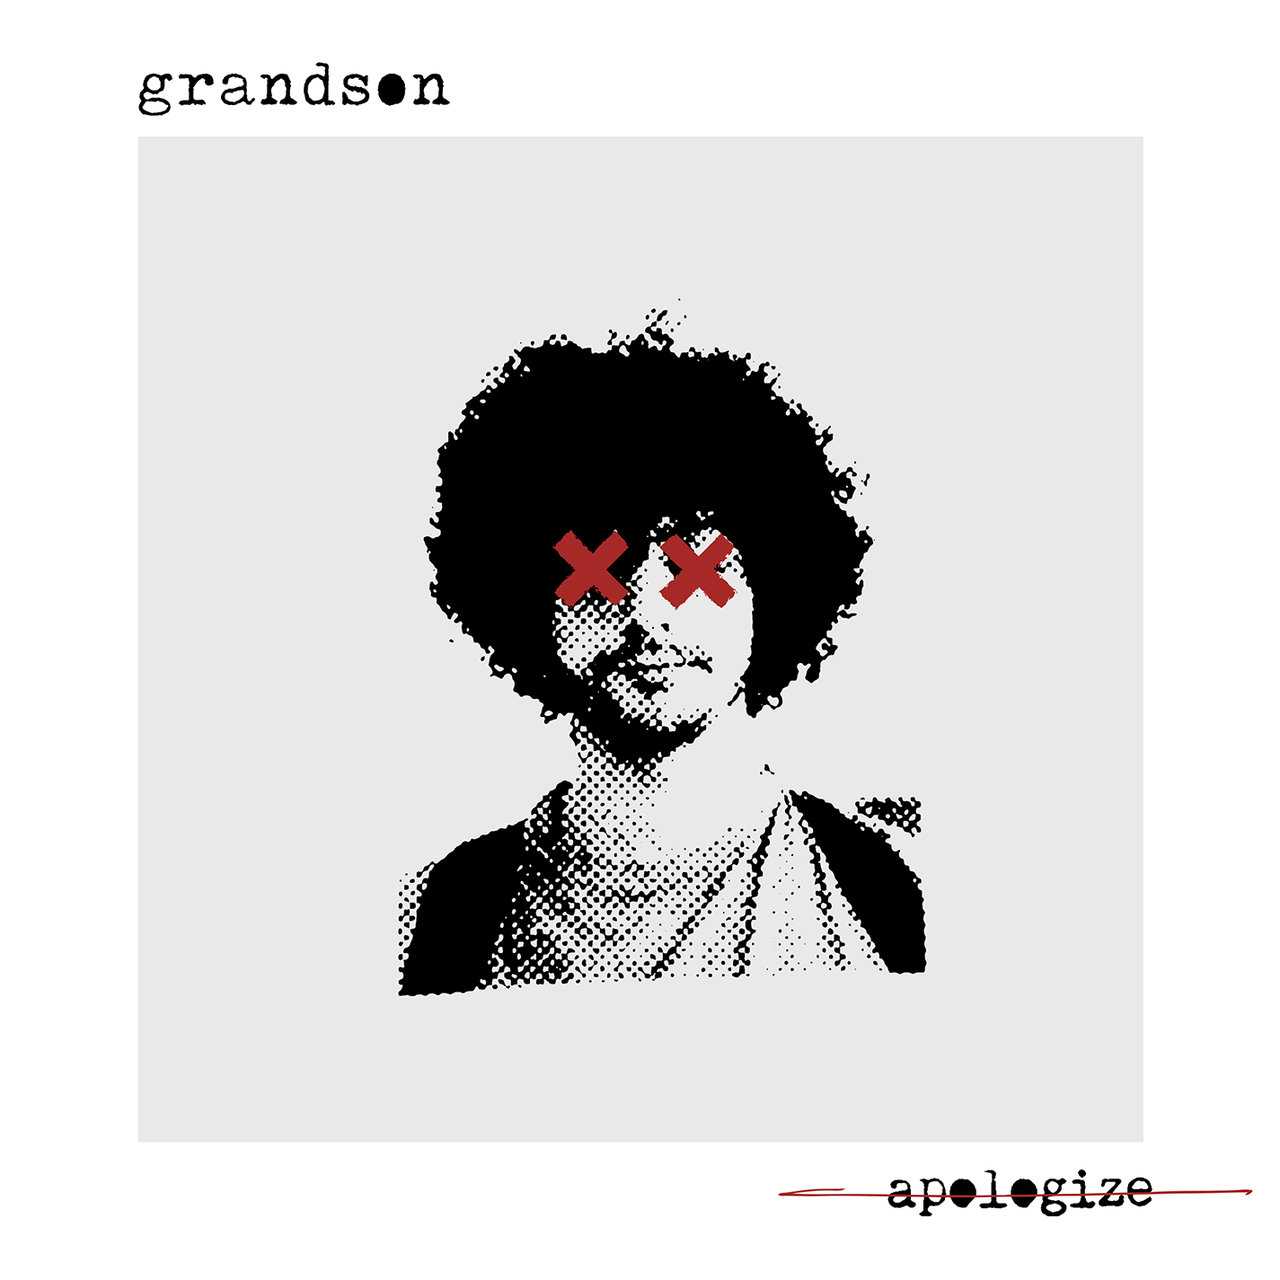 Grandson - Apologize